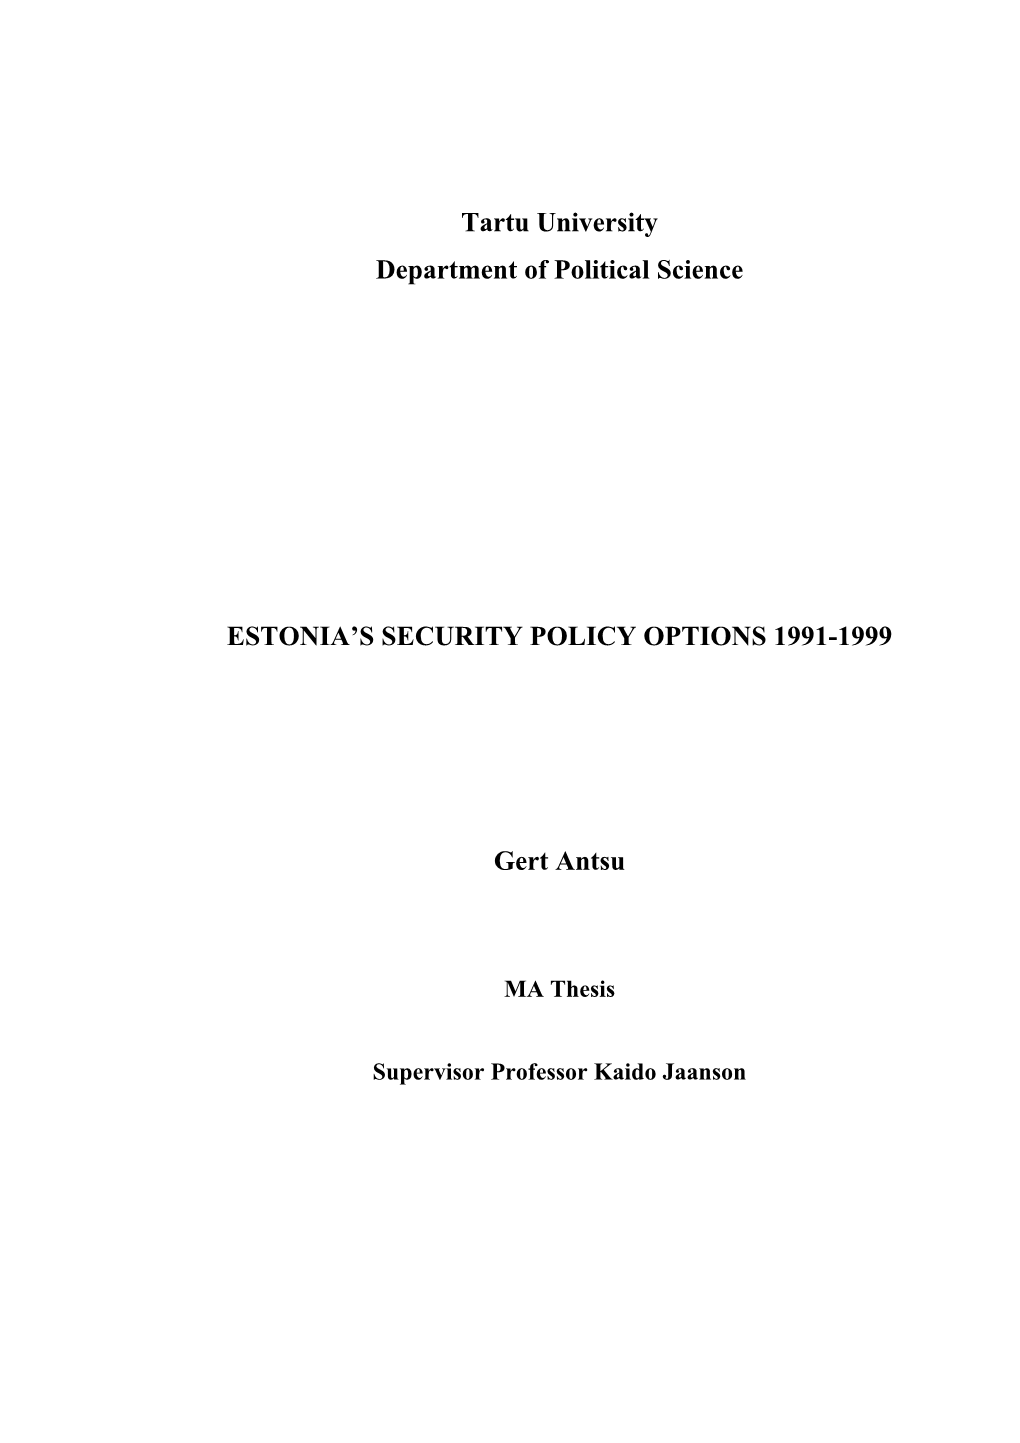 Estonia S Security Policy Options 1991-1999